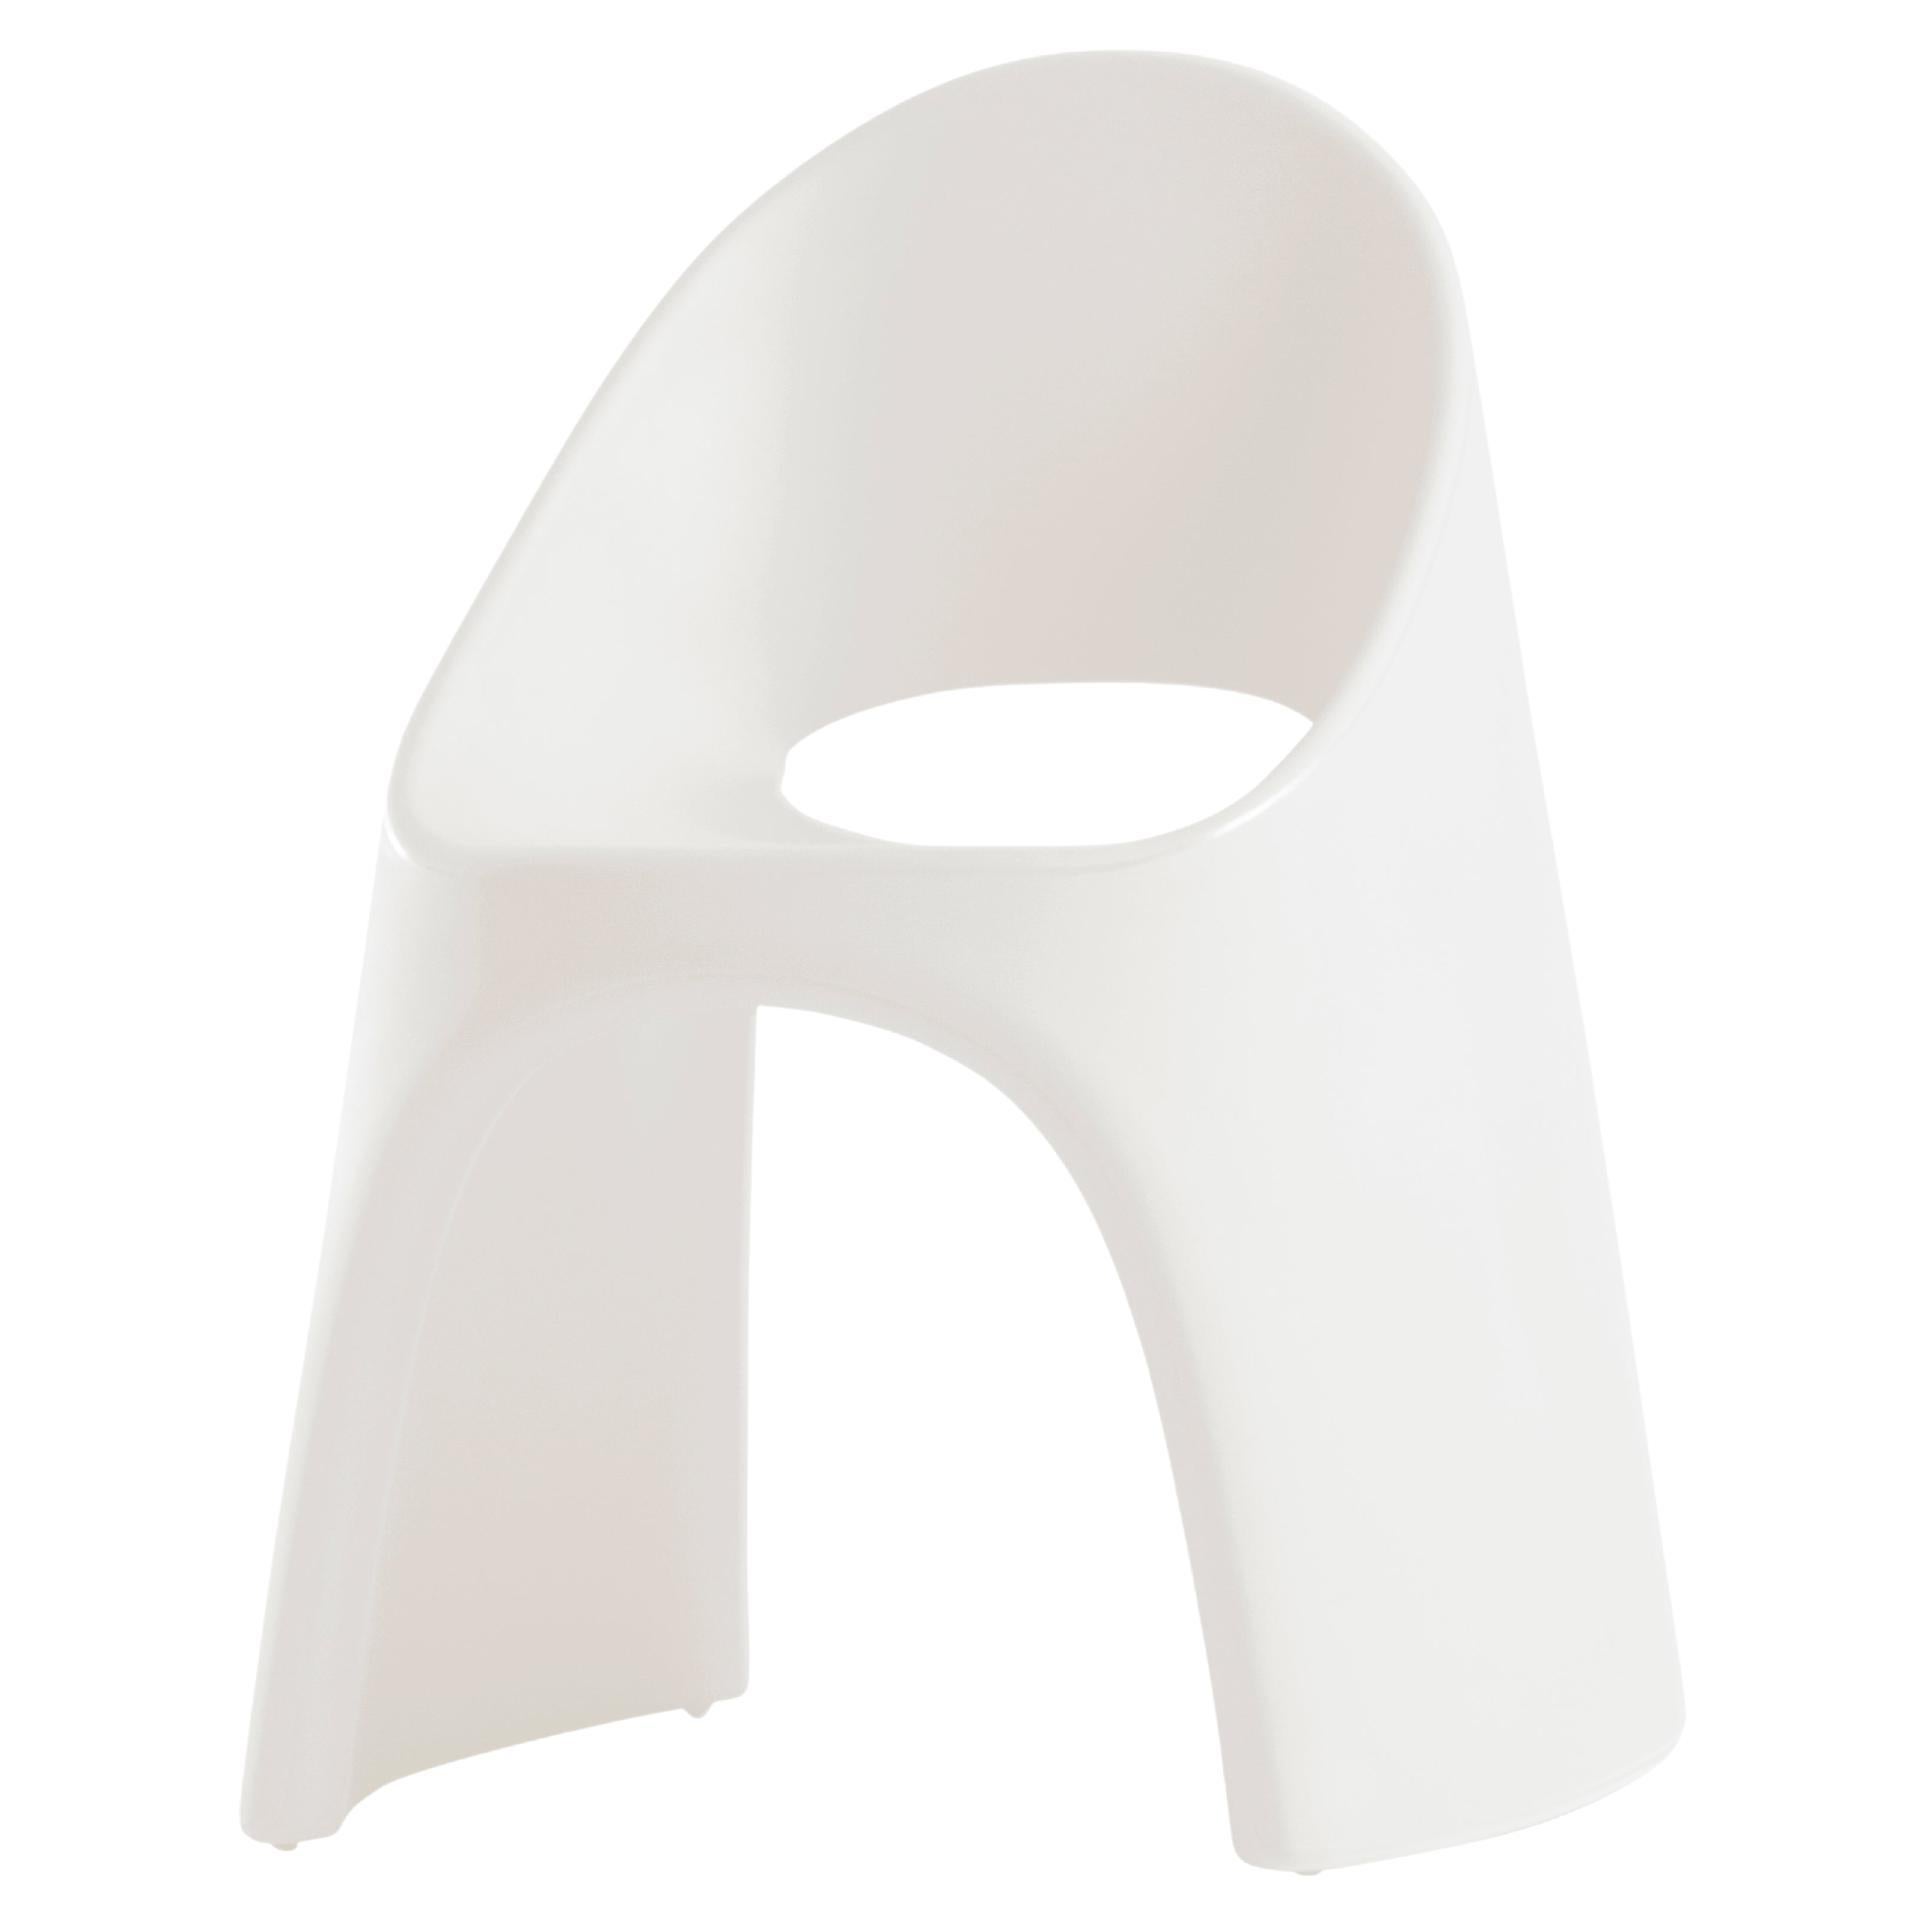 Slide Design Amélie Chair in Milky White by Italo Pertichini For Sale